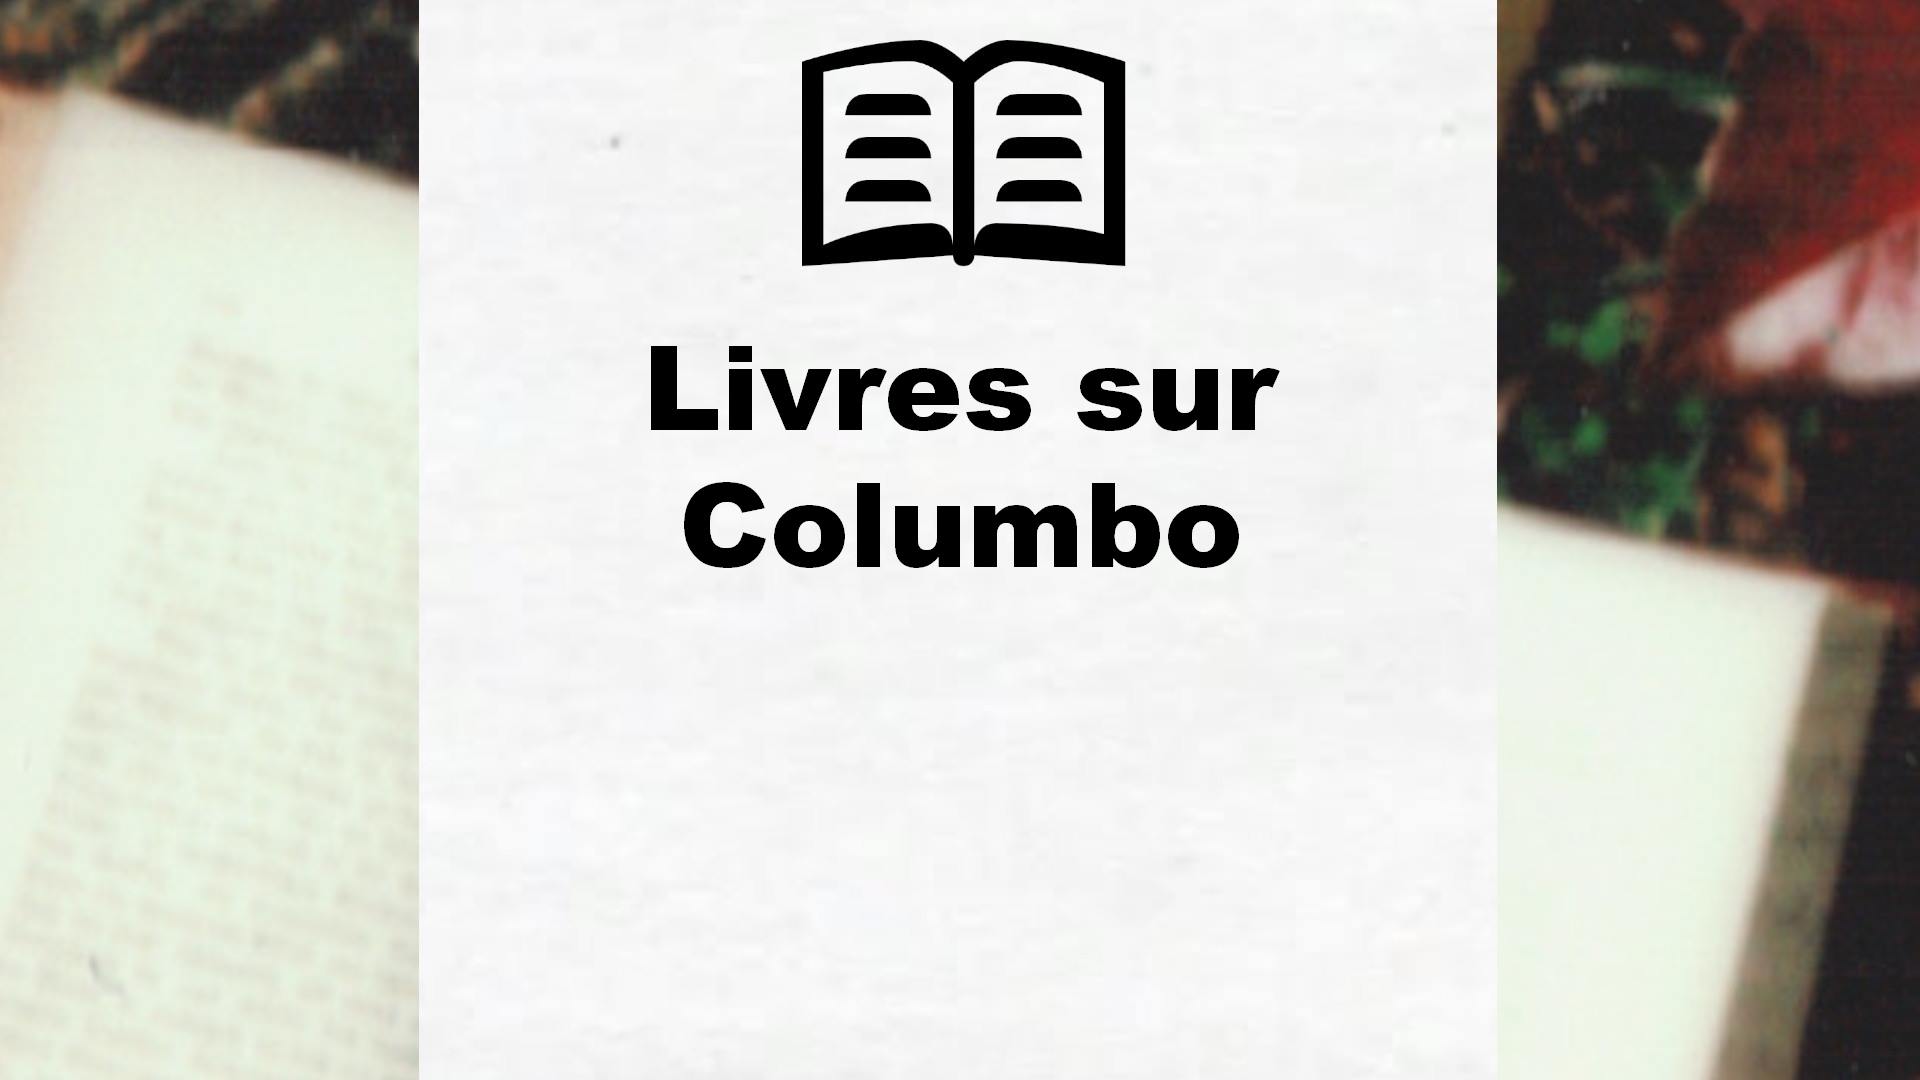 Livres sur Columbo